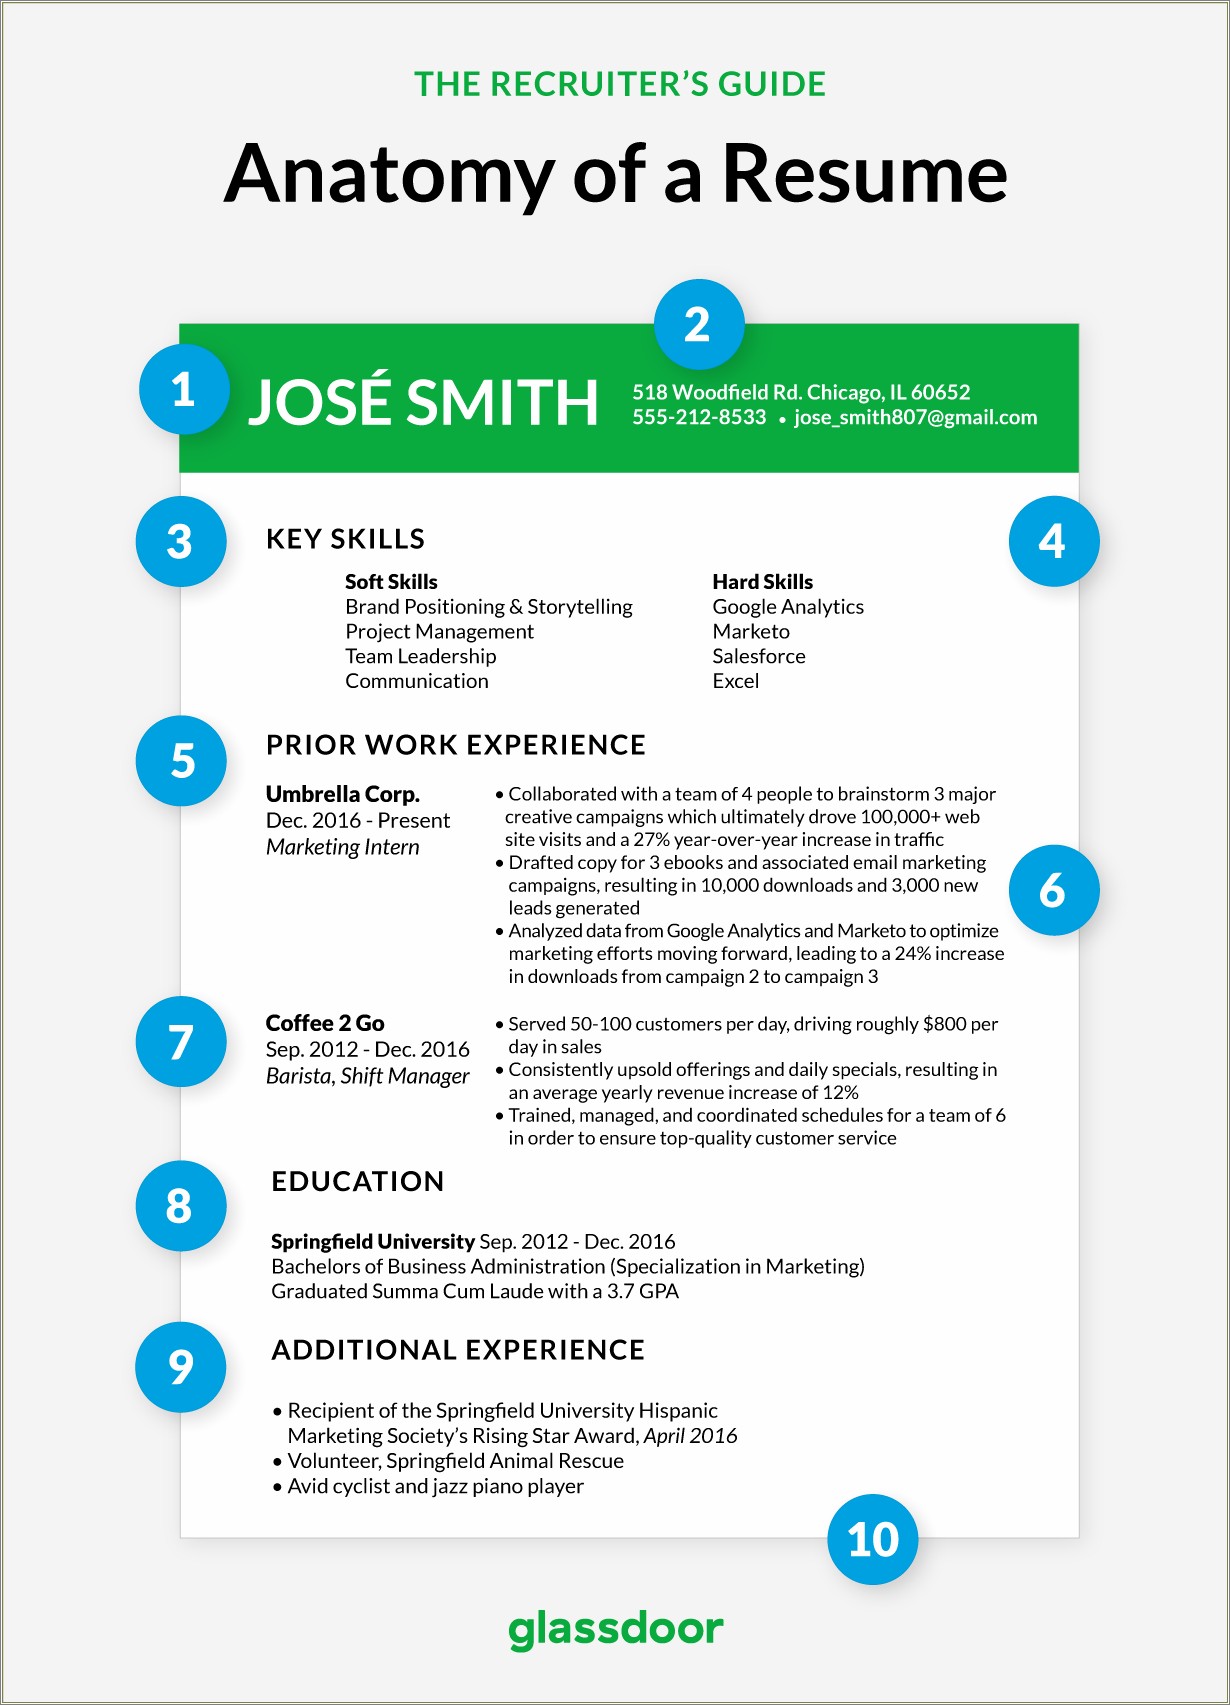 Key Skills To Use On A Resume